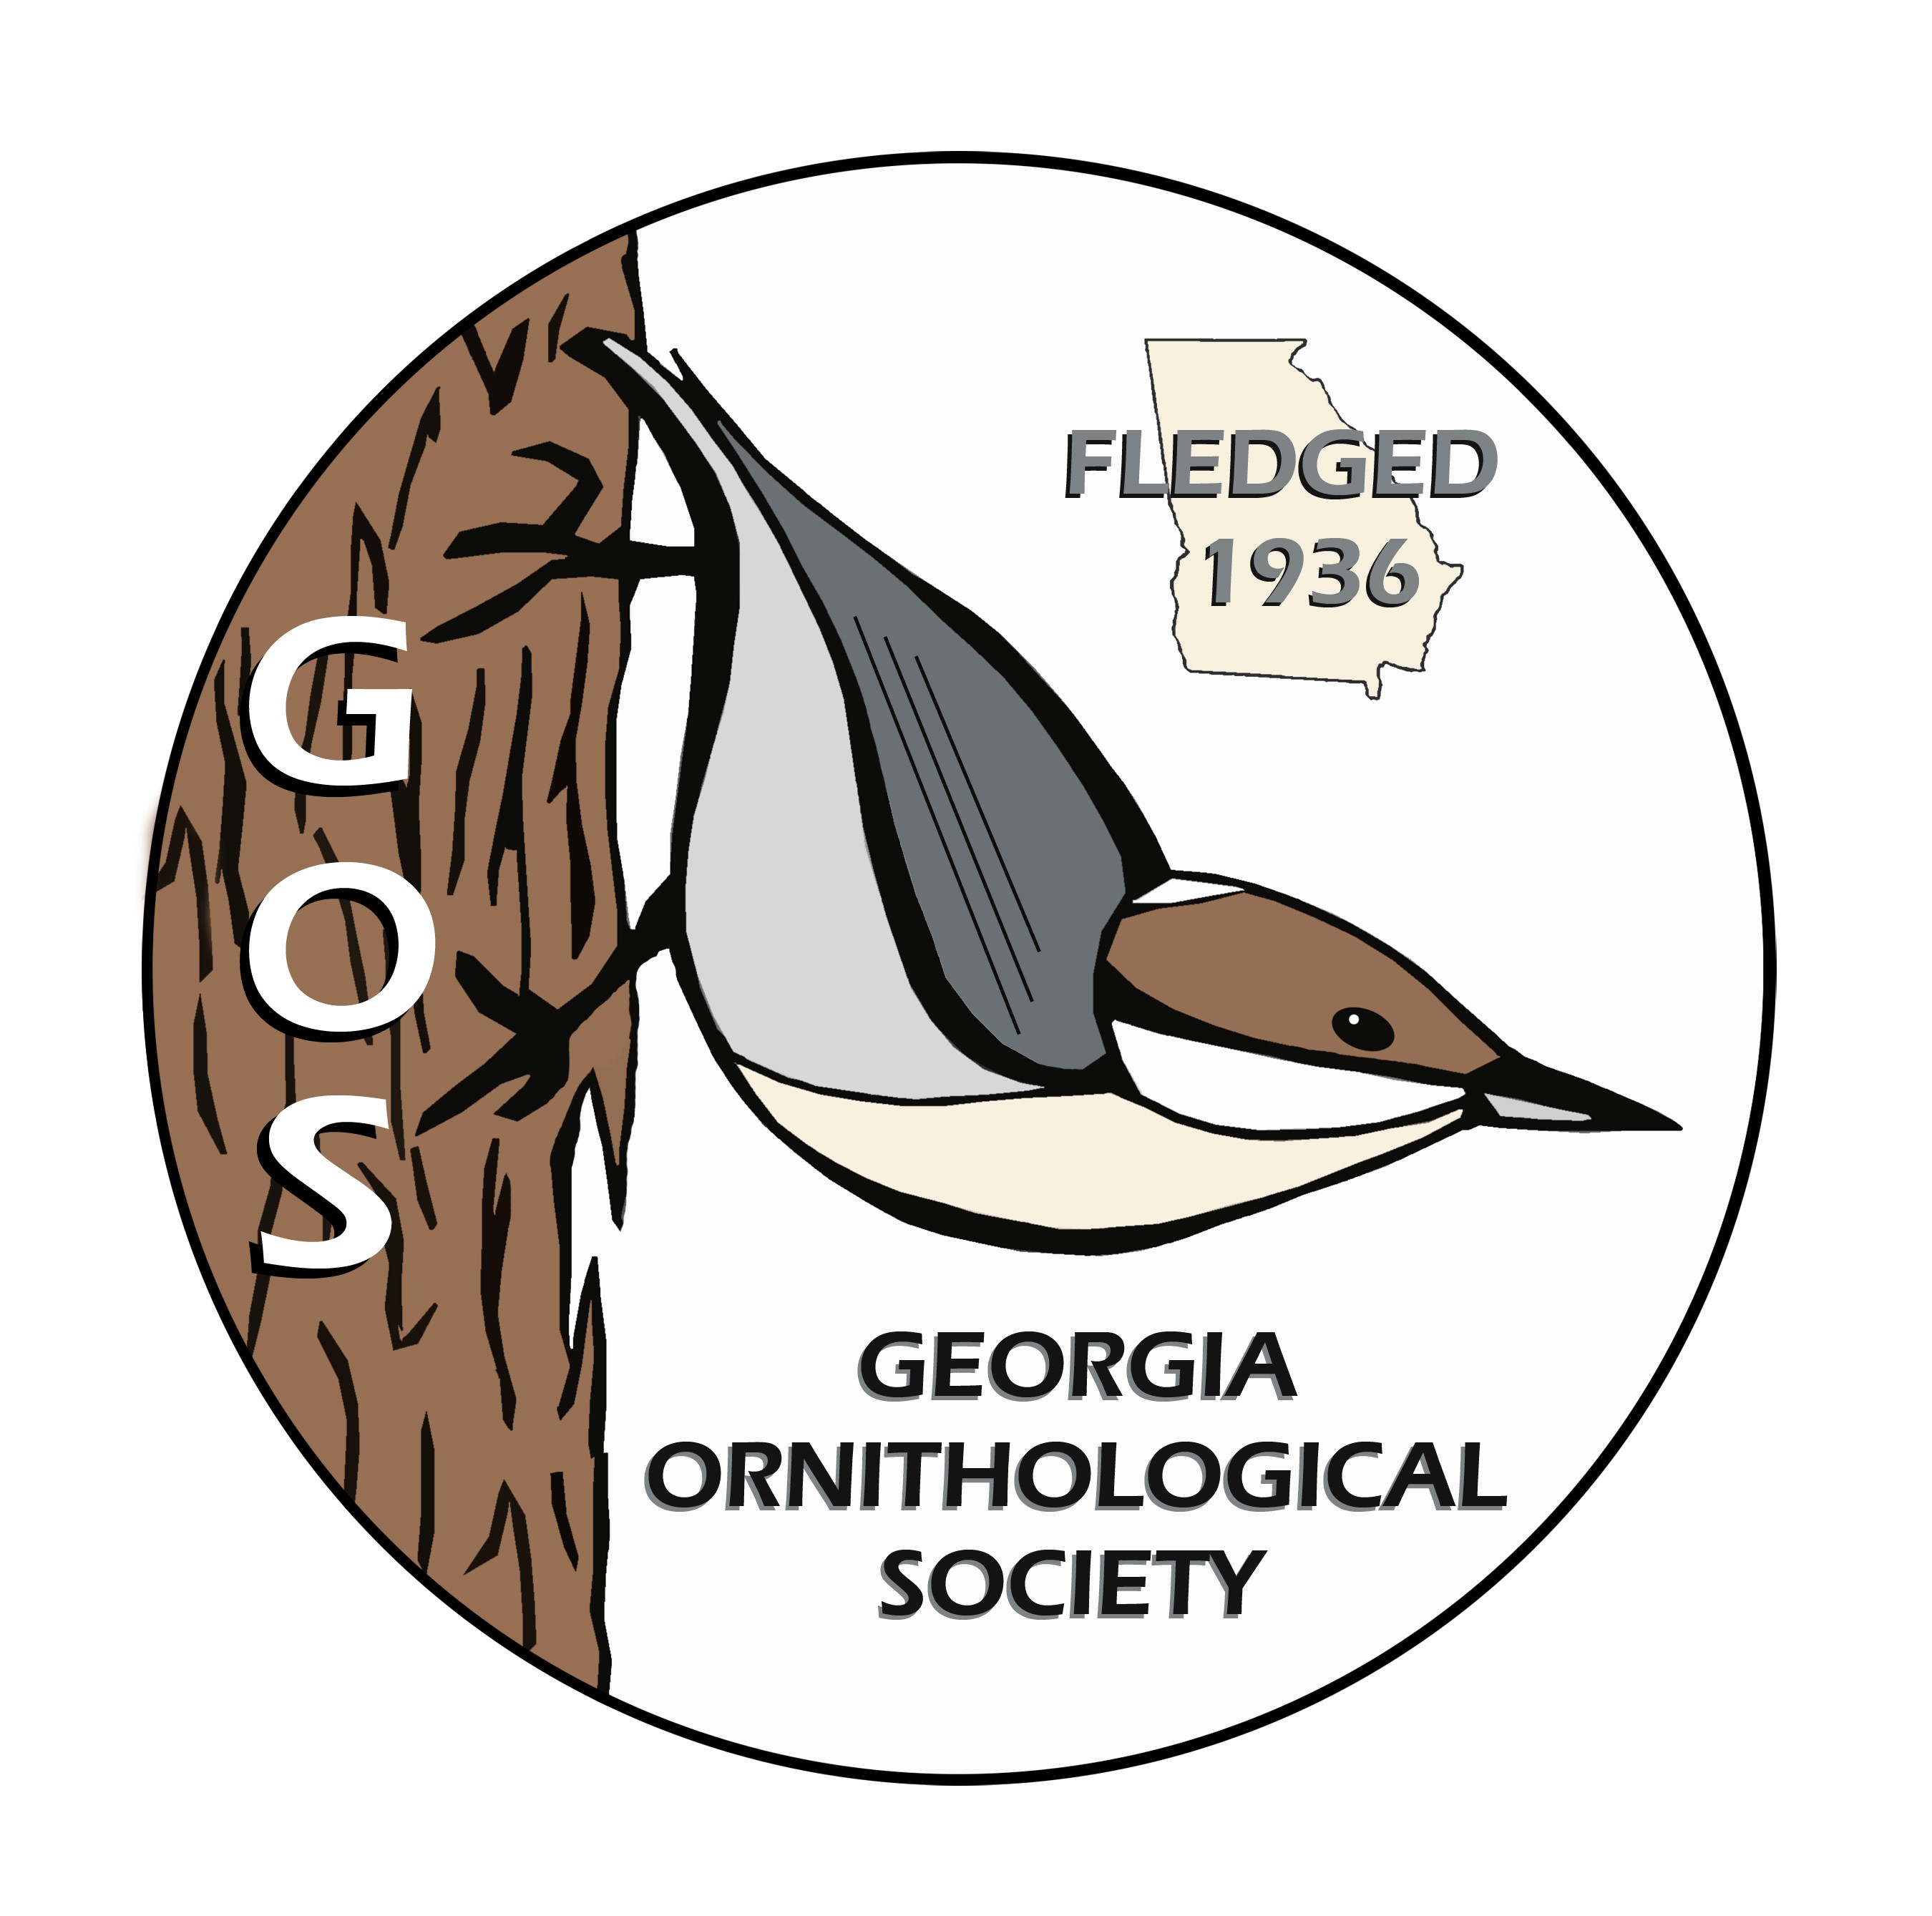 Georgia Ornithological Society